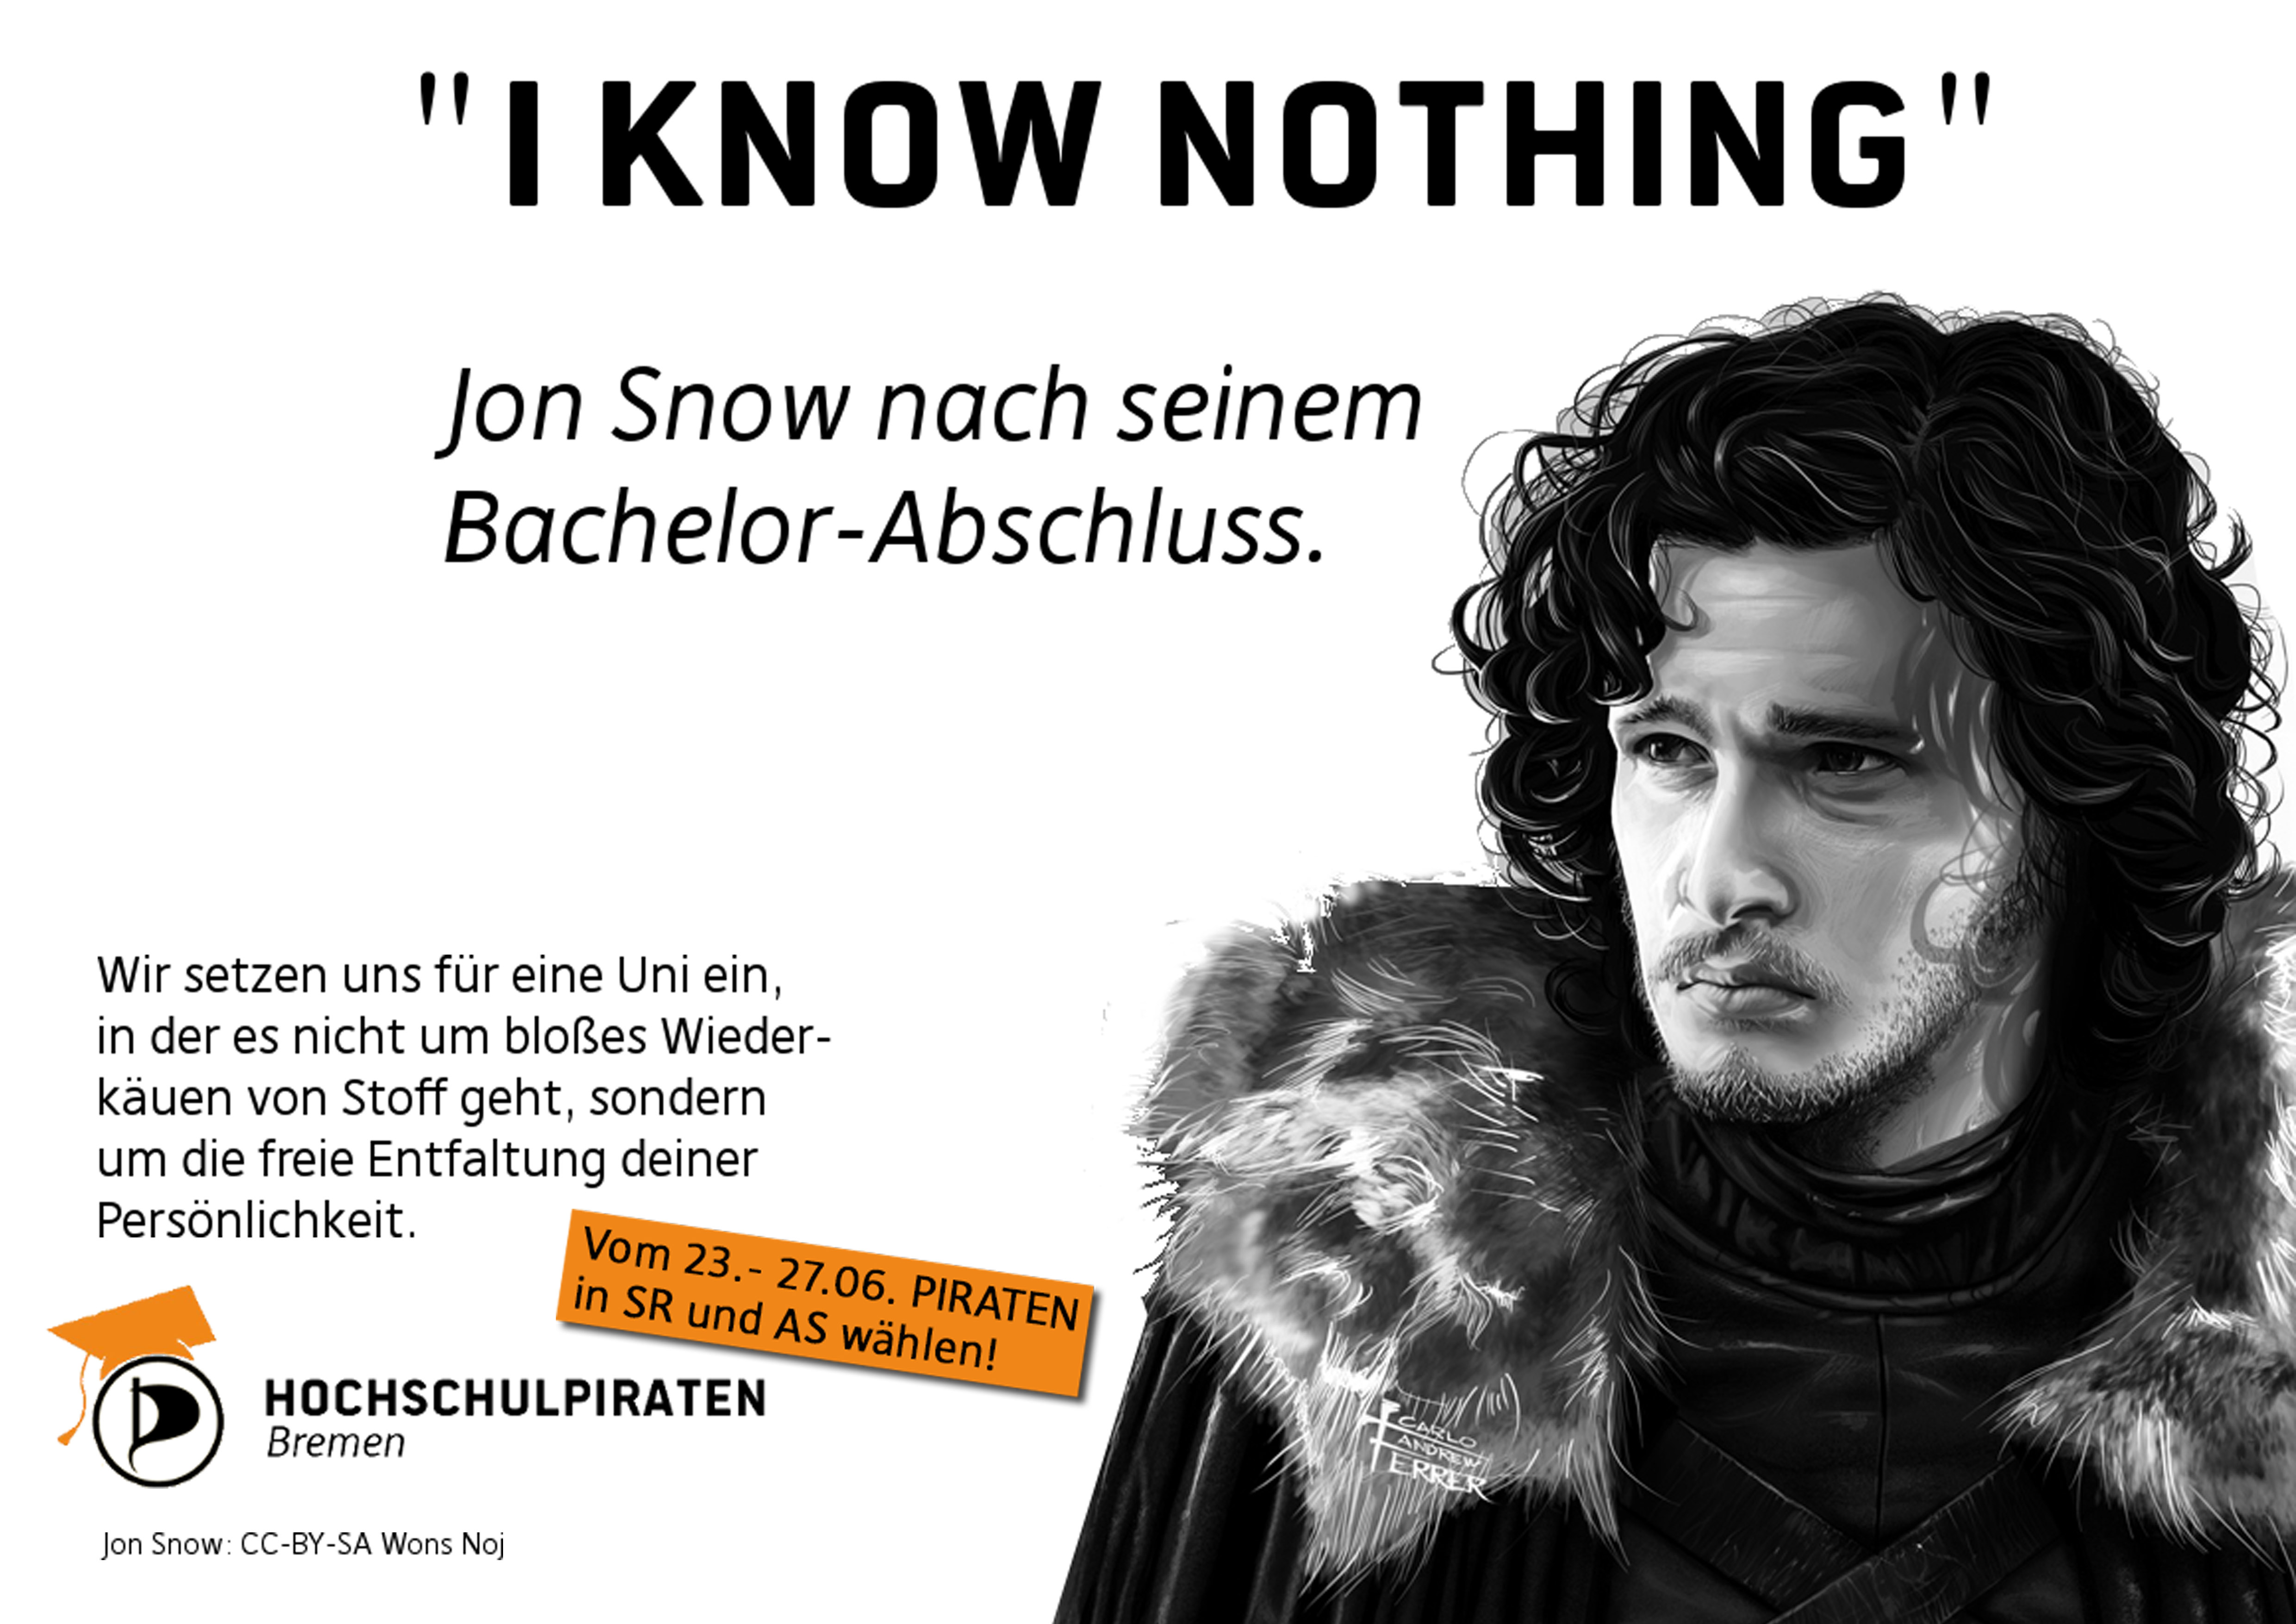 You know nothing, Jon Snow!